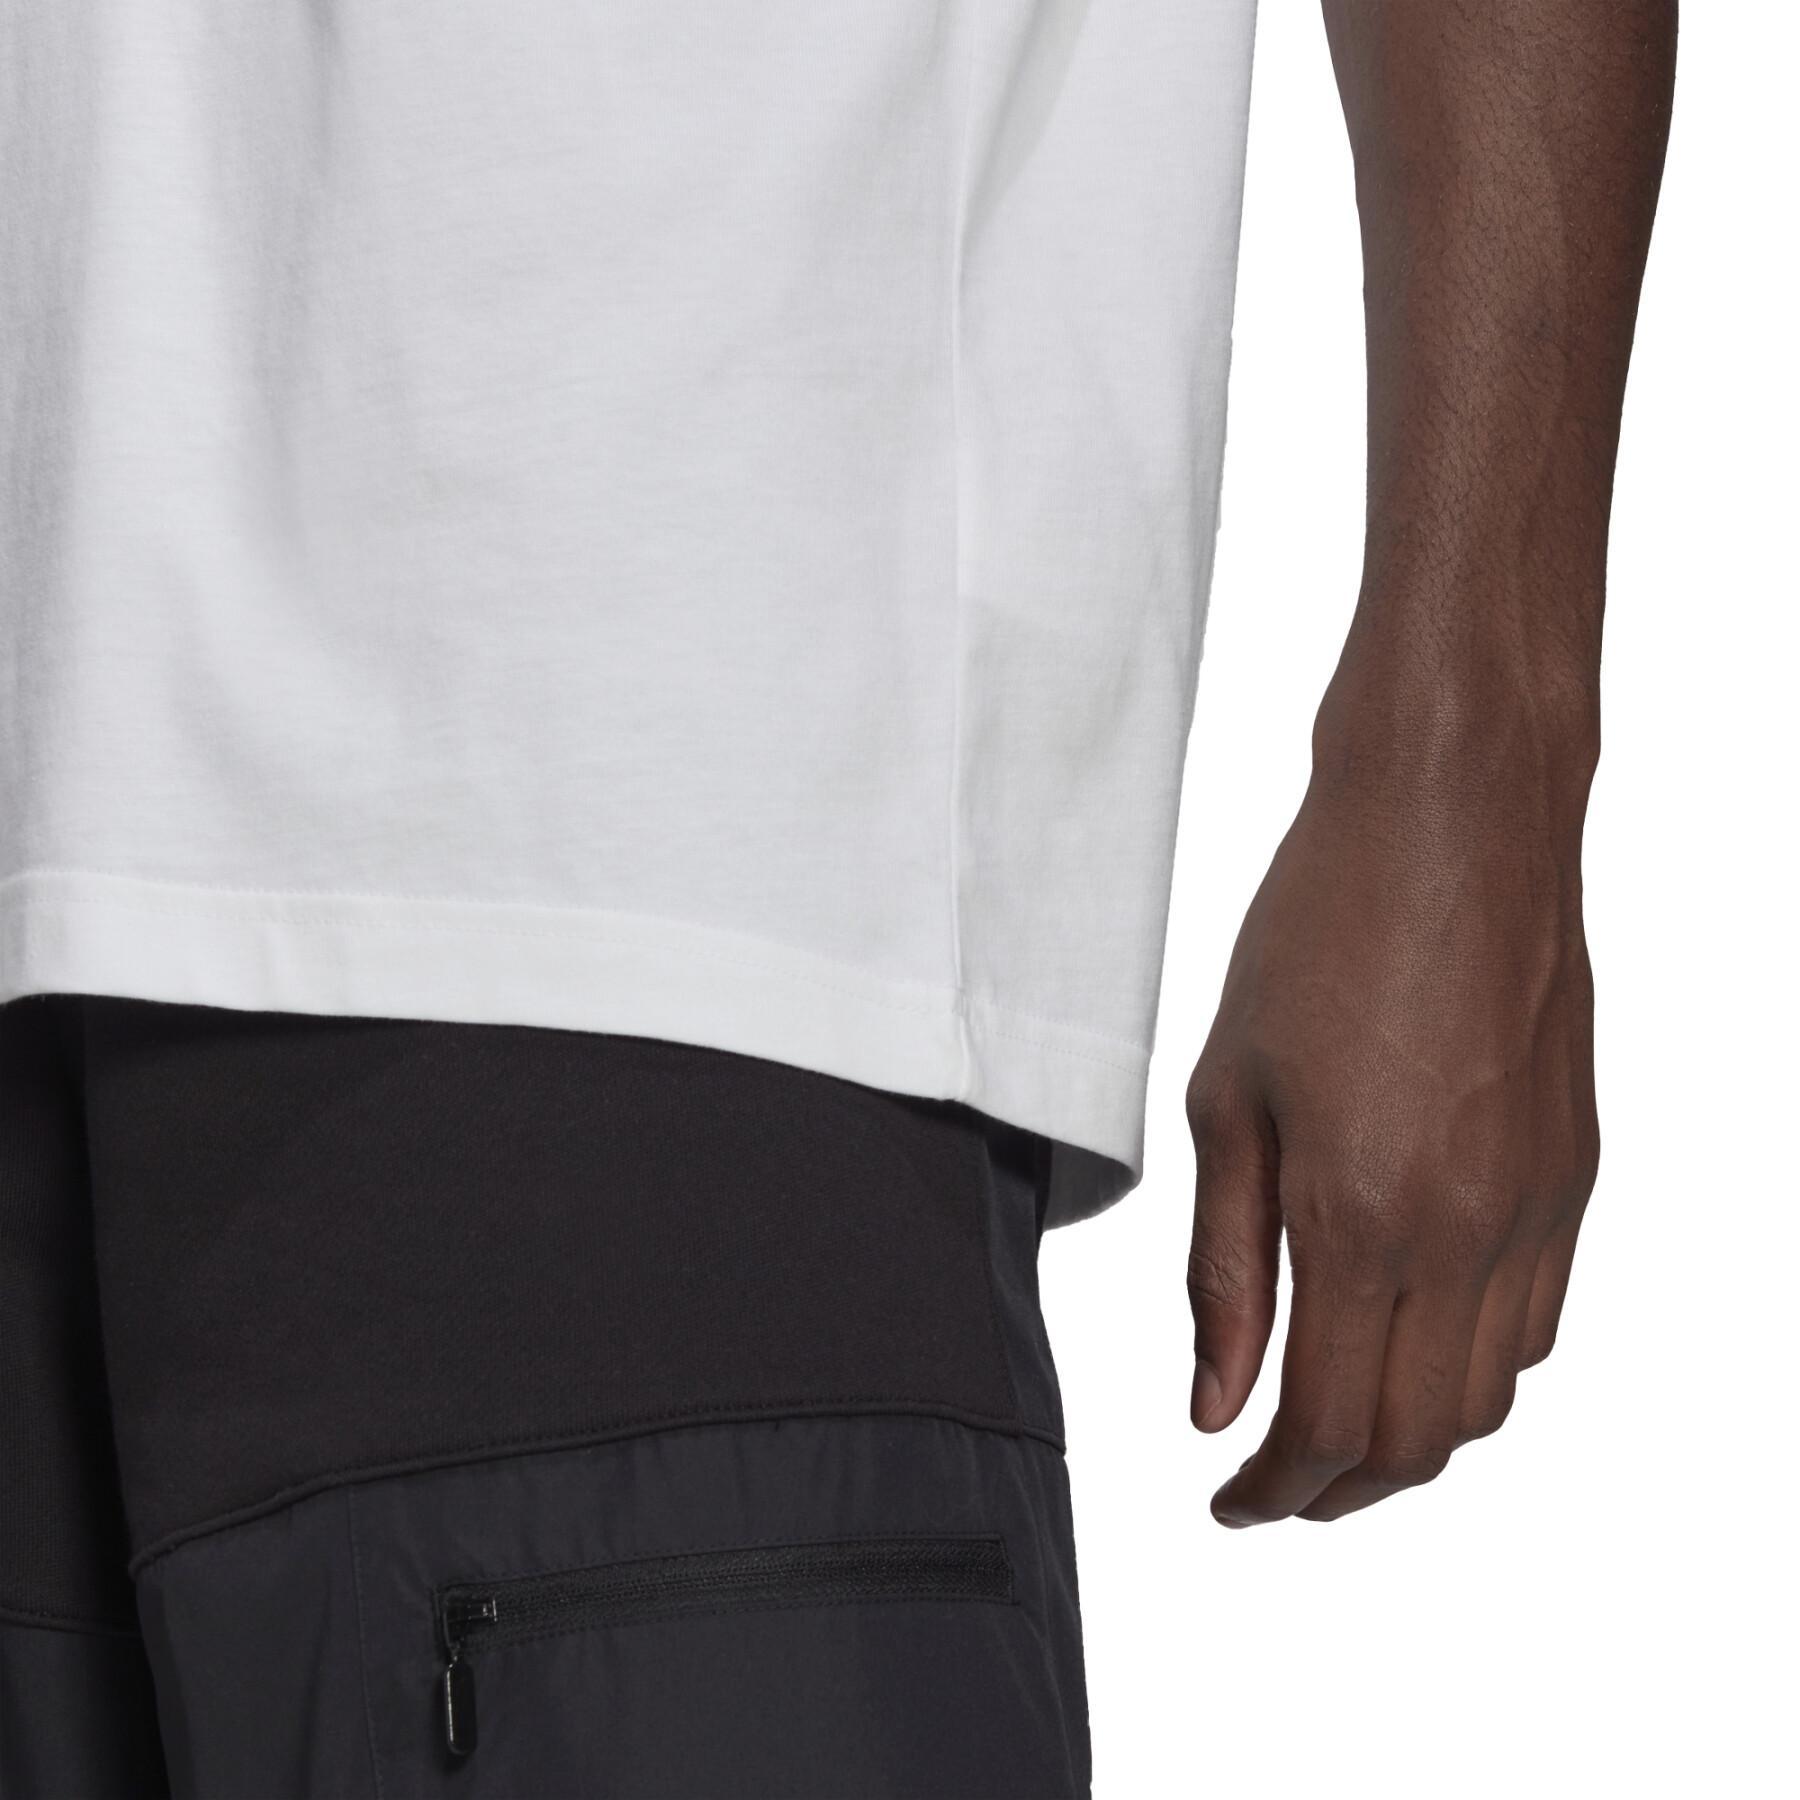 Kurzarm-T-Shirt adidas Originals Adicolor Classics Trefoil